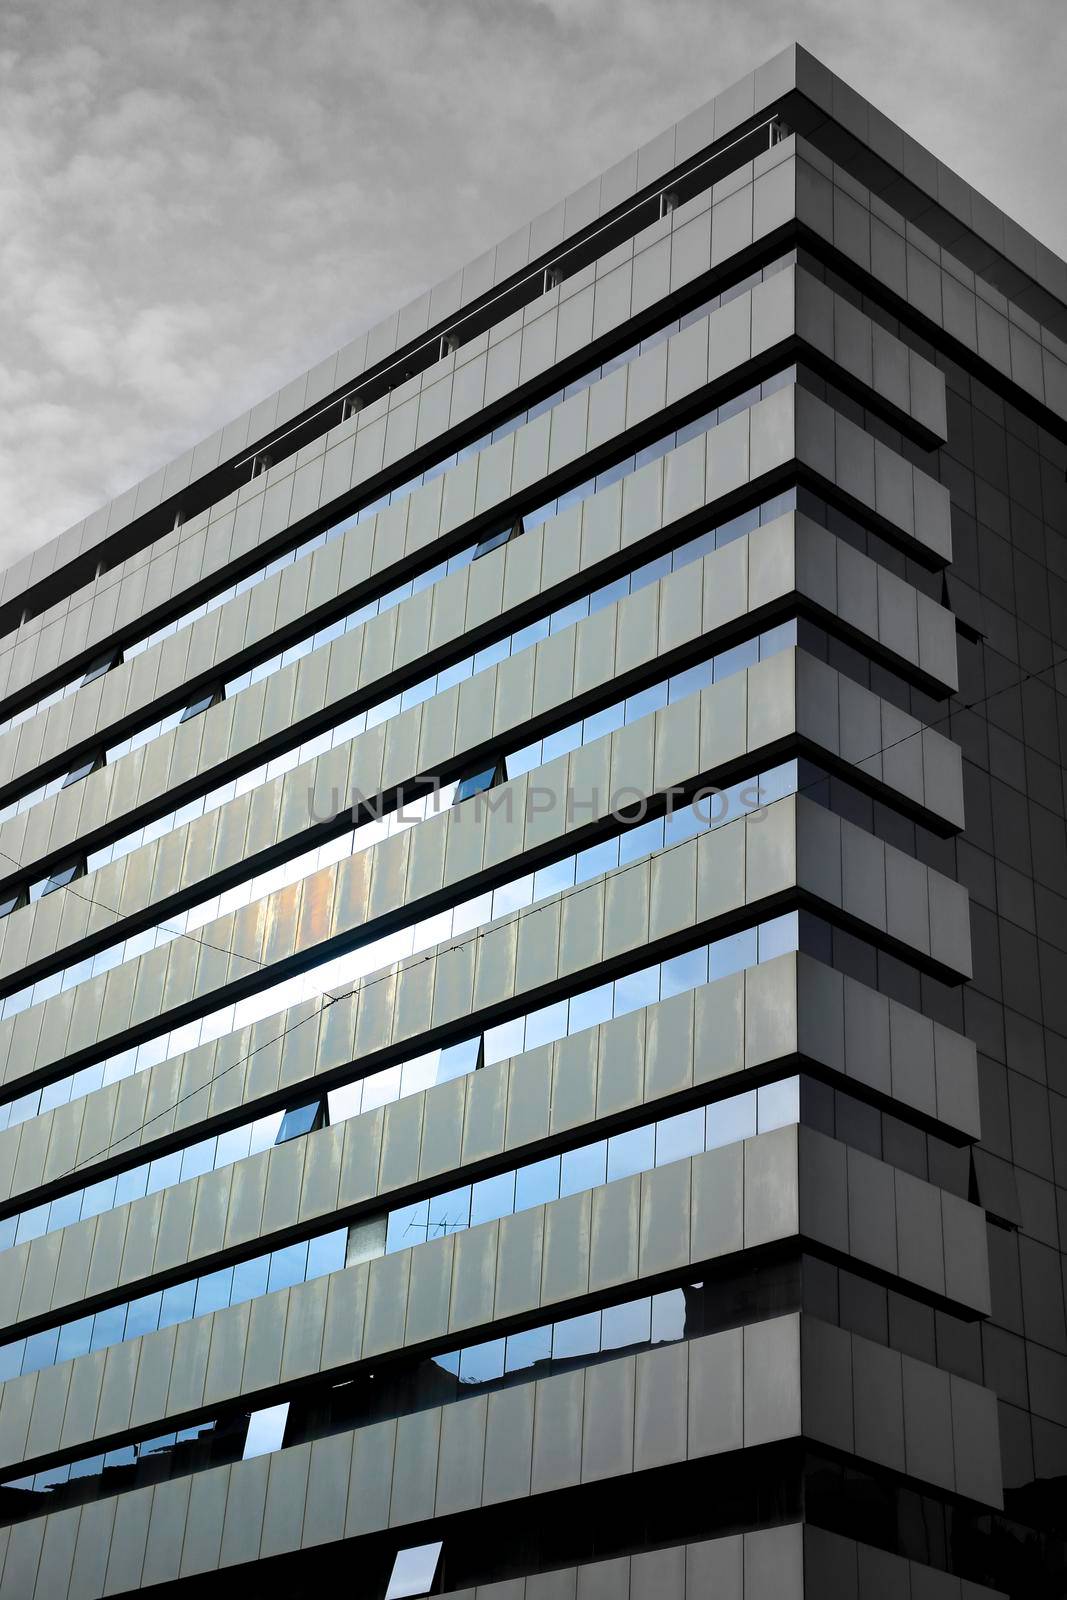 Geometric facade with black glass windows by soniabonet